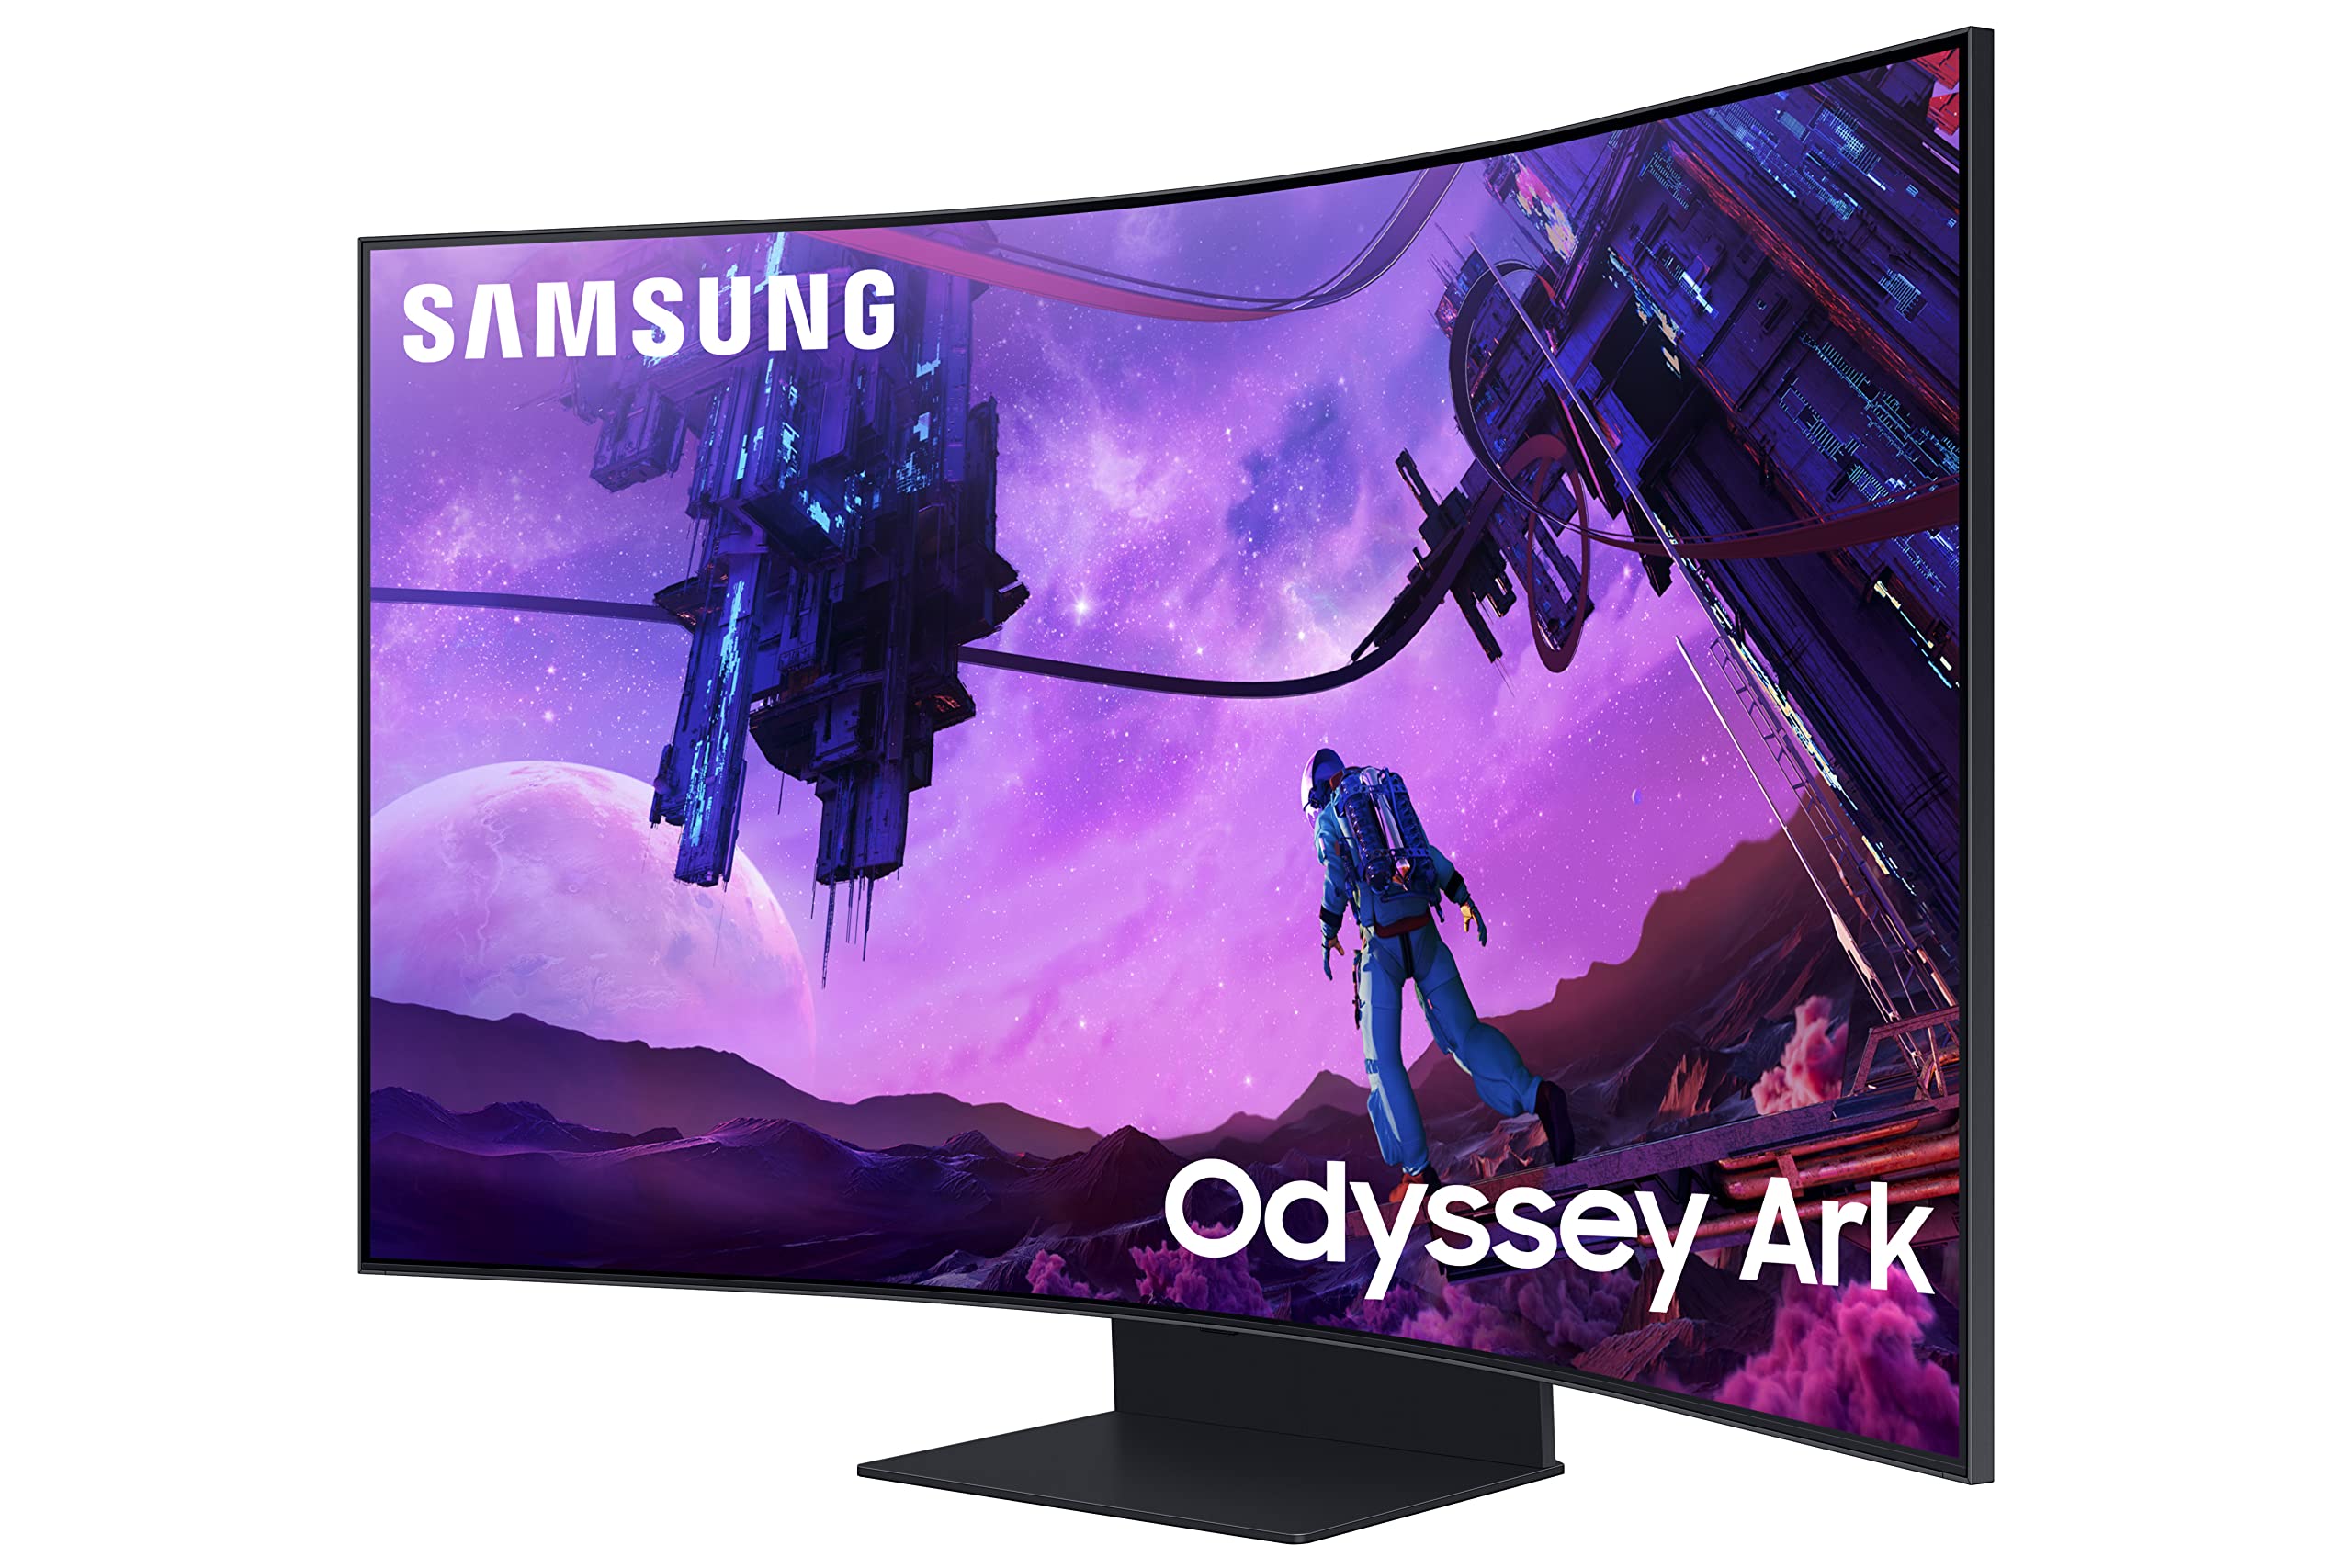 $1799.99: Samsung Odyssey Ark 55-Inch Curved Gaming Screen, 4K UHD 165Hz